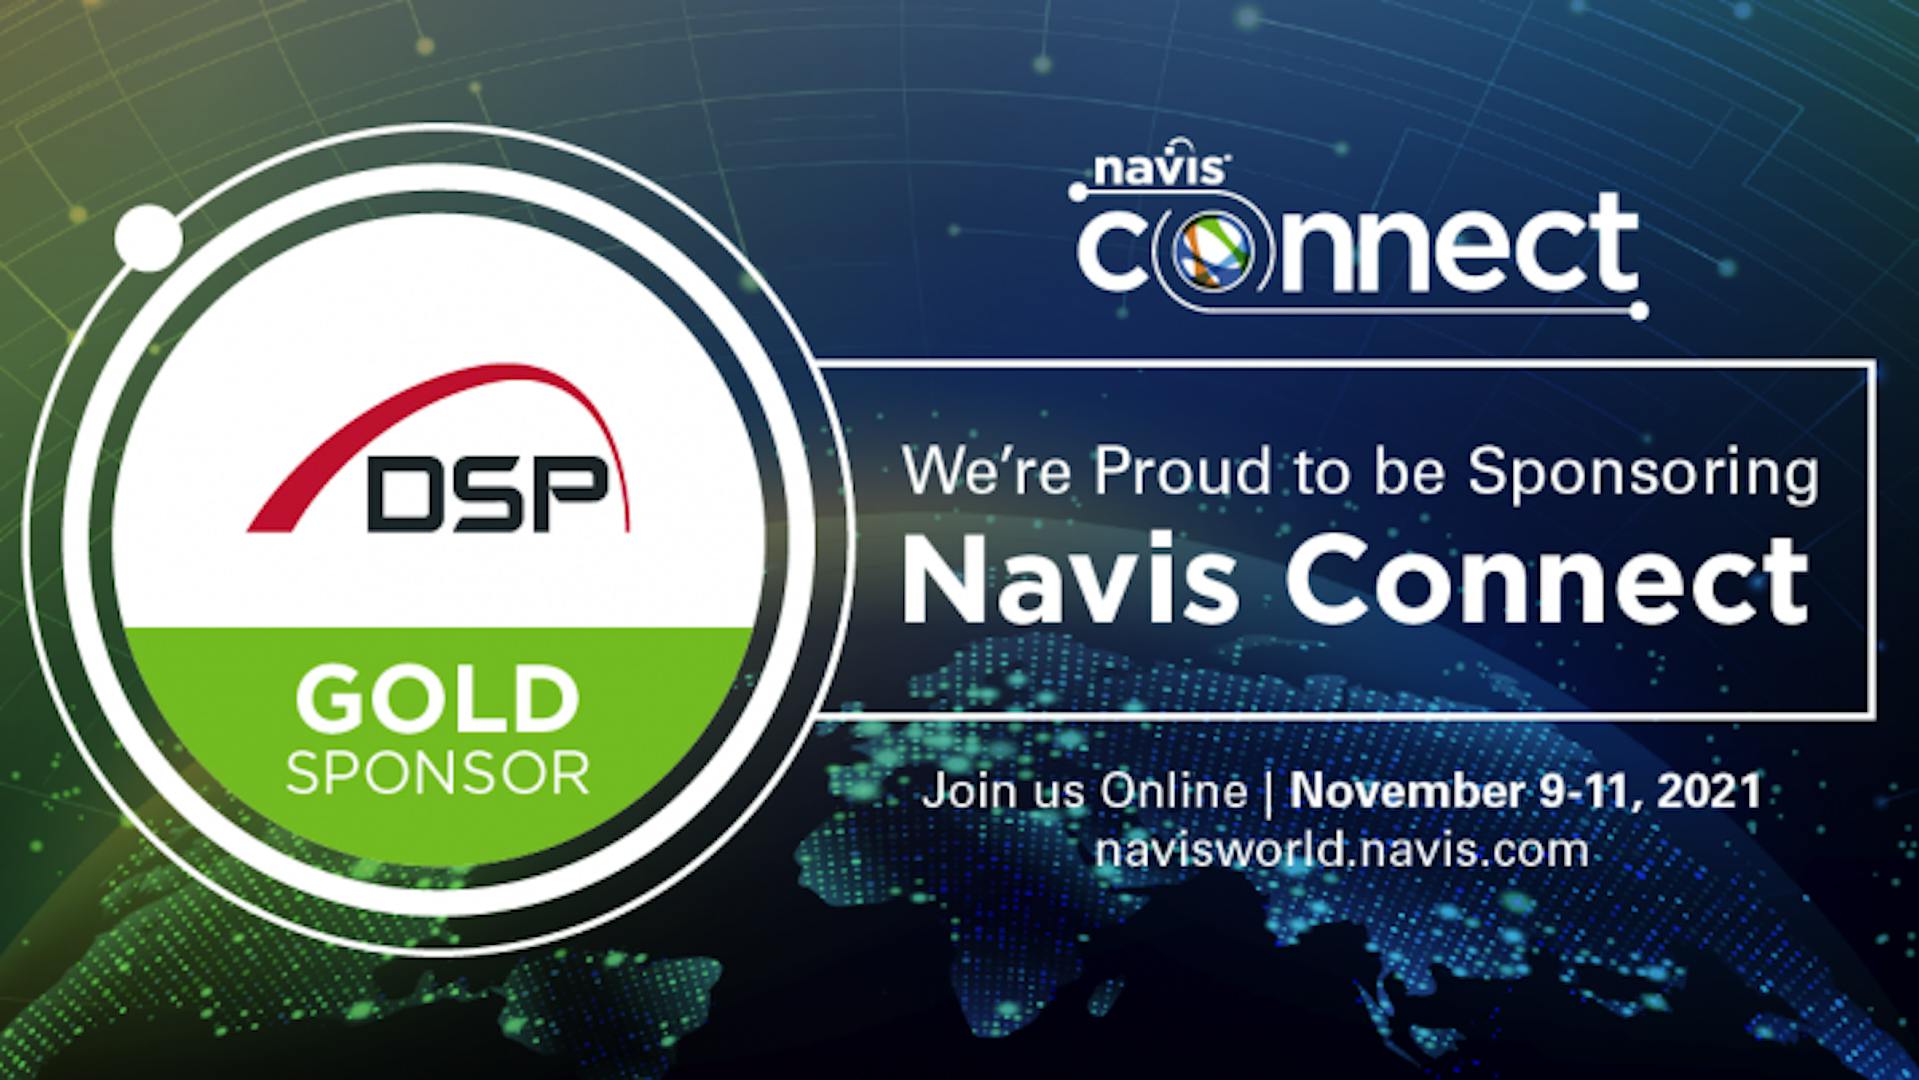 DSP Gold sponsor of NAVIS CONNECT-November 9-11